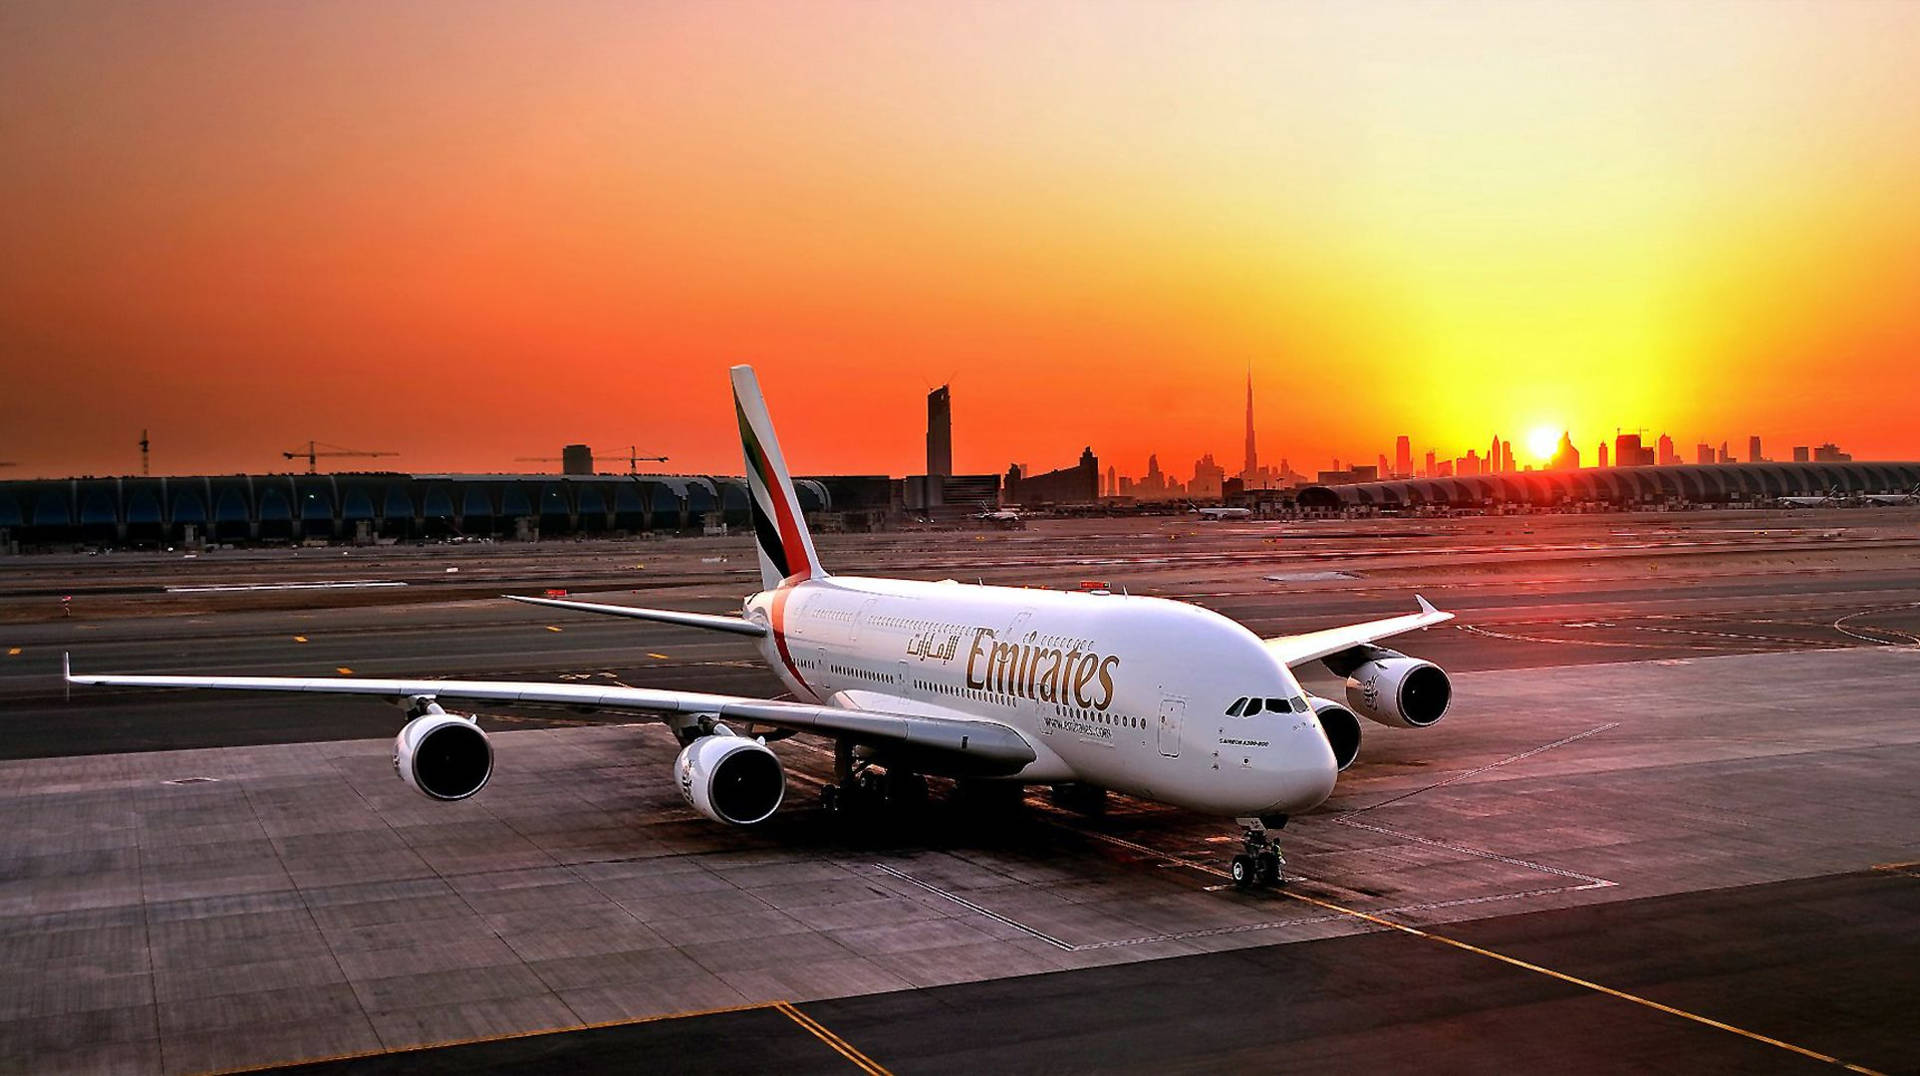 Sunset Emirates Airplane